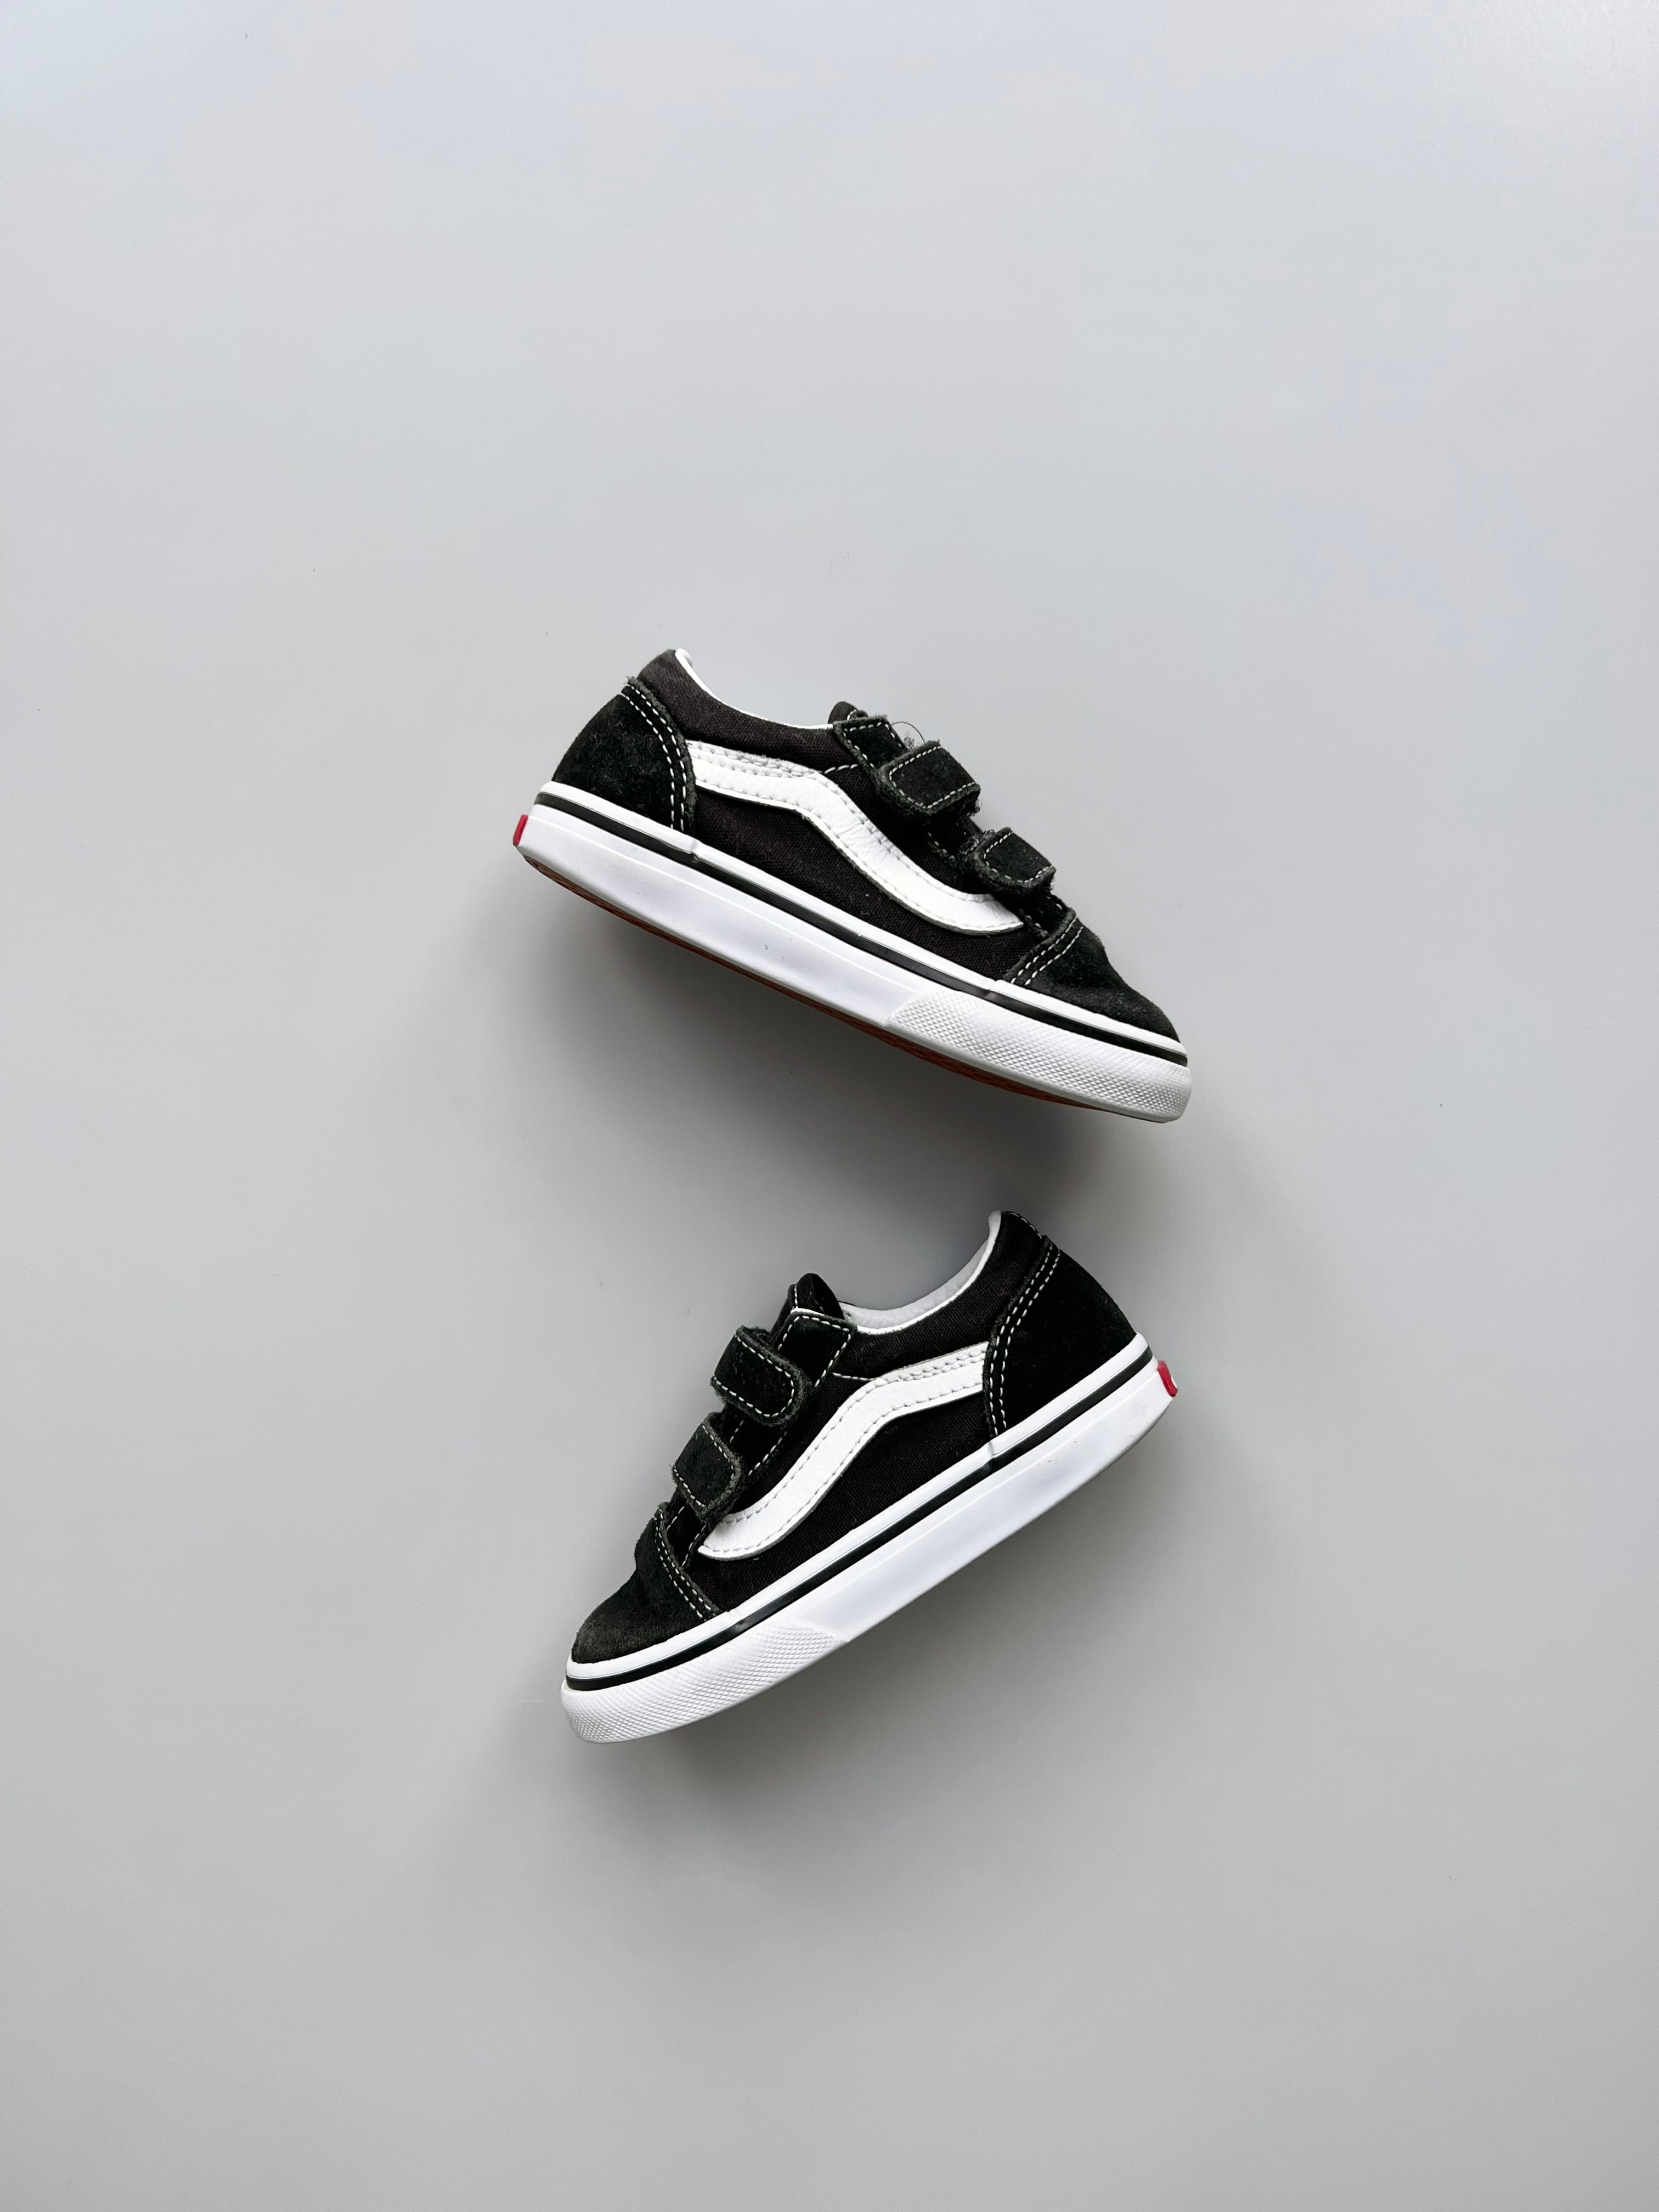 Vans Skate Shoes Size 7